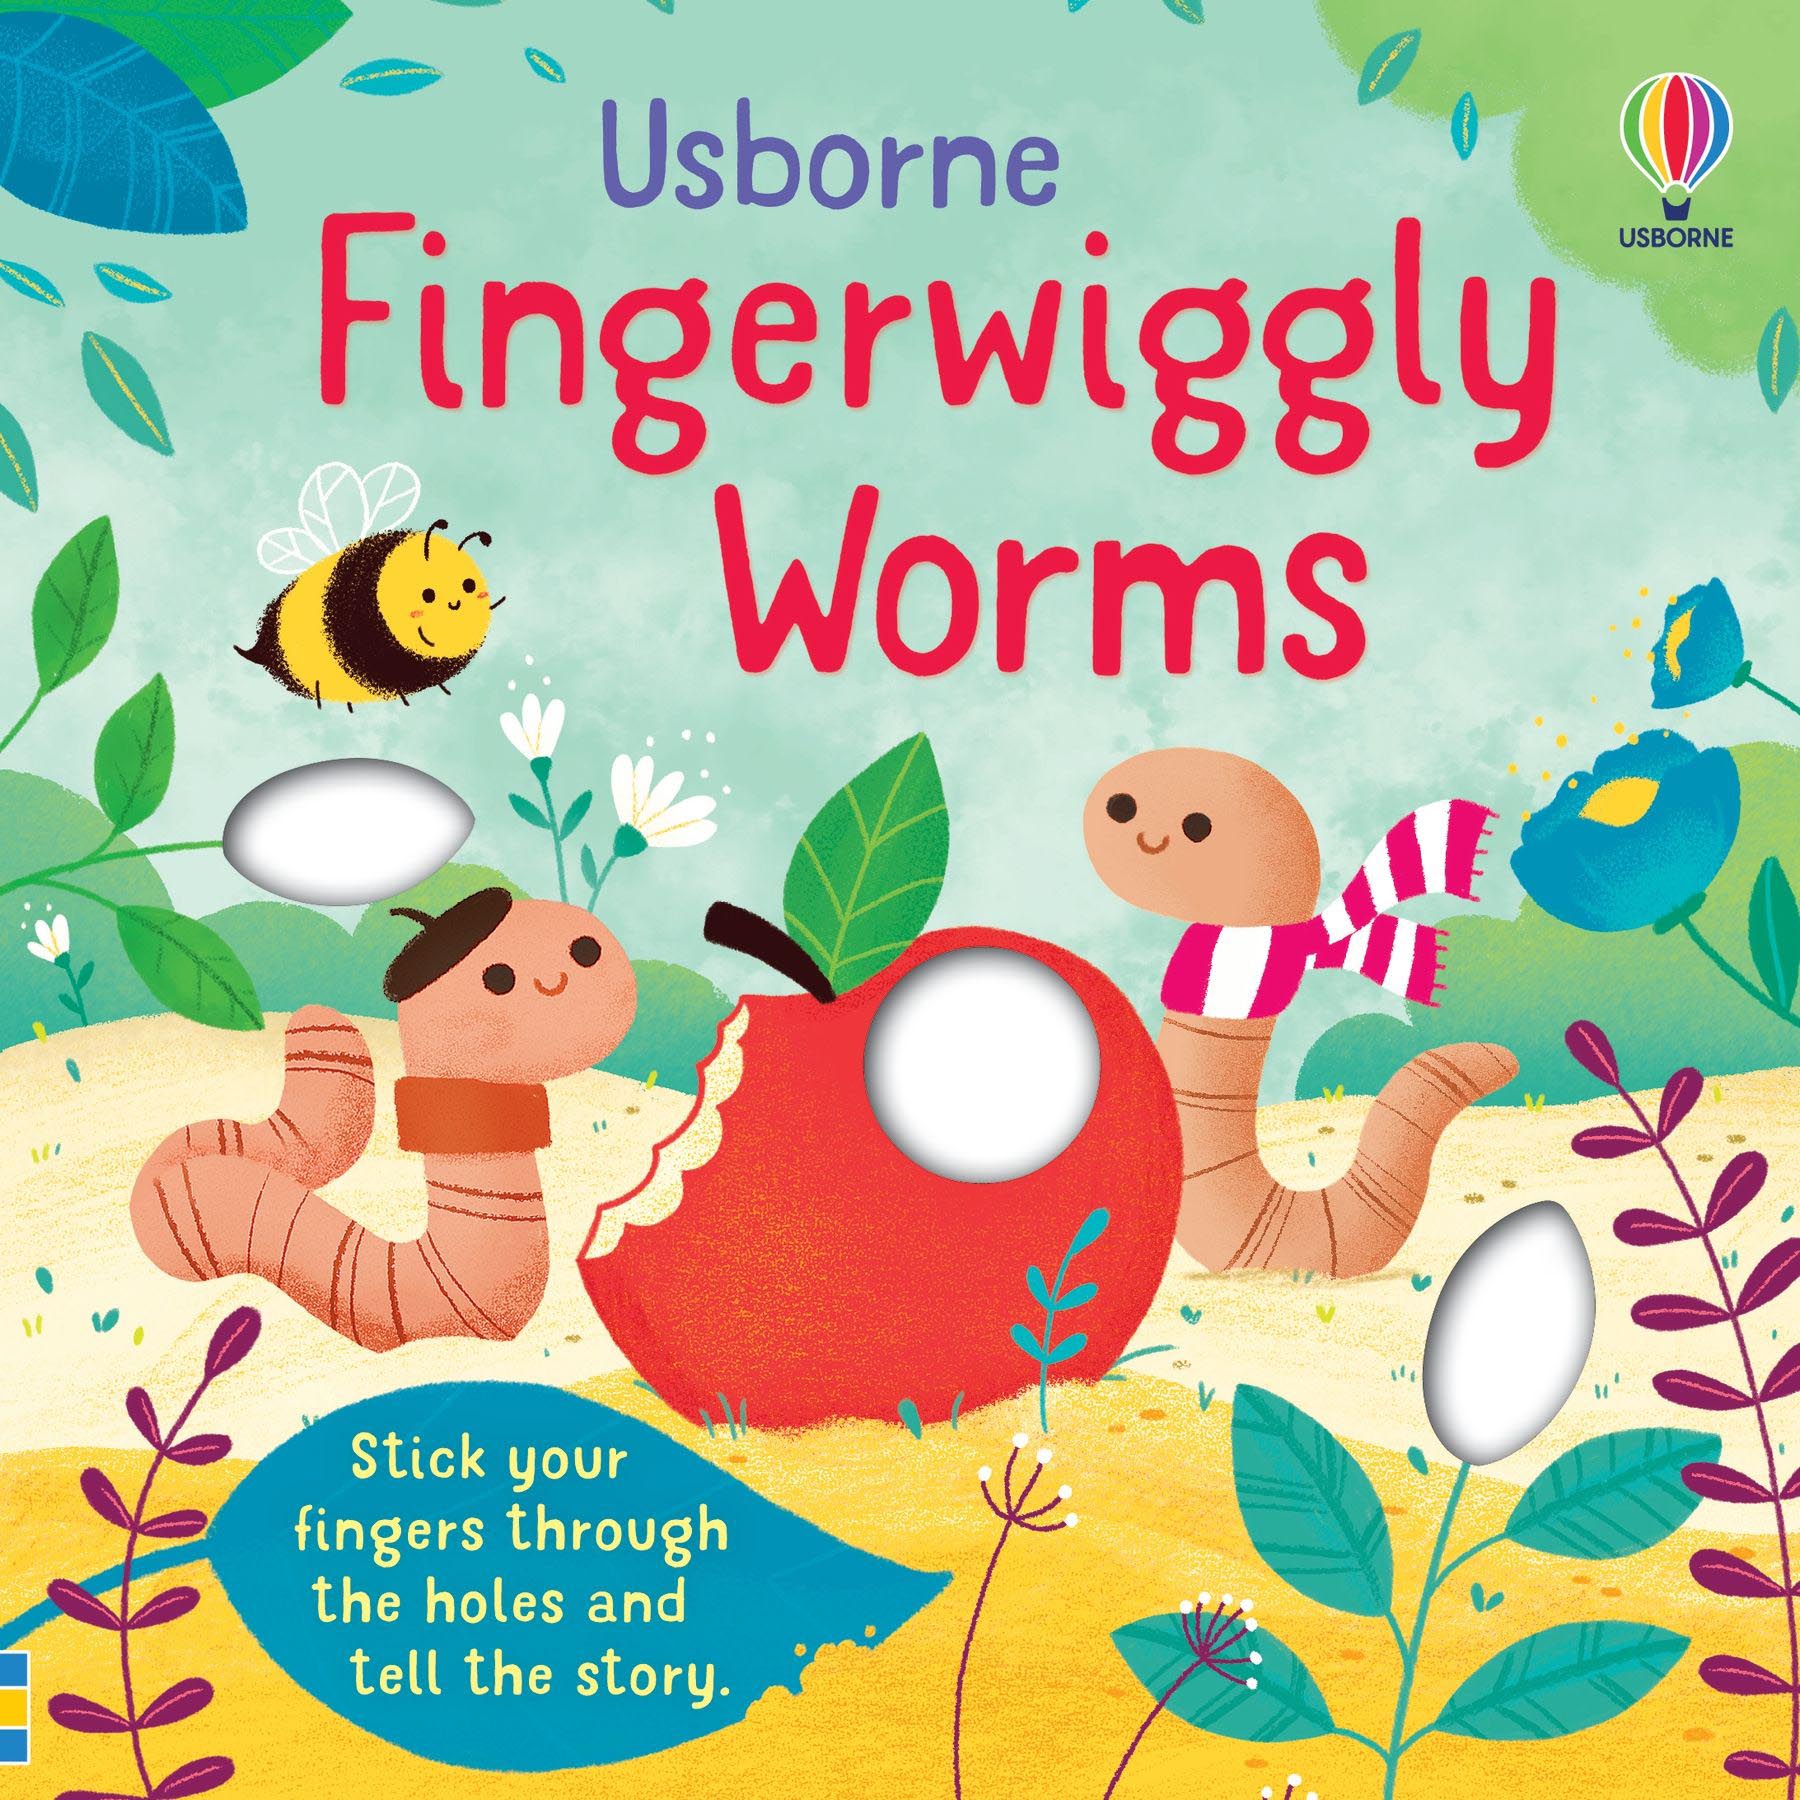 Usborne Fingerwiggly Worms